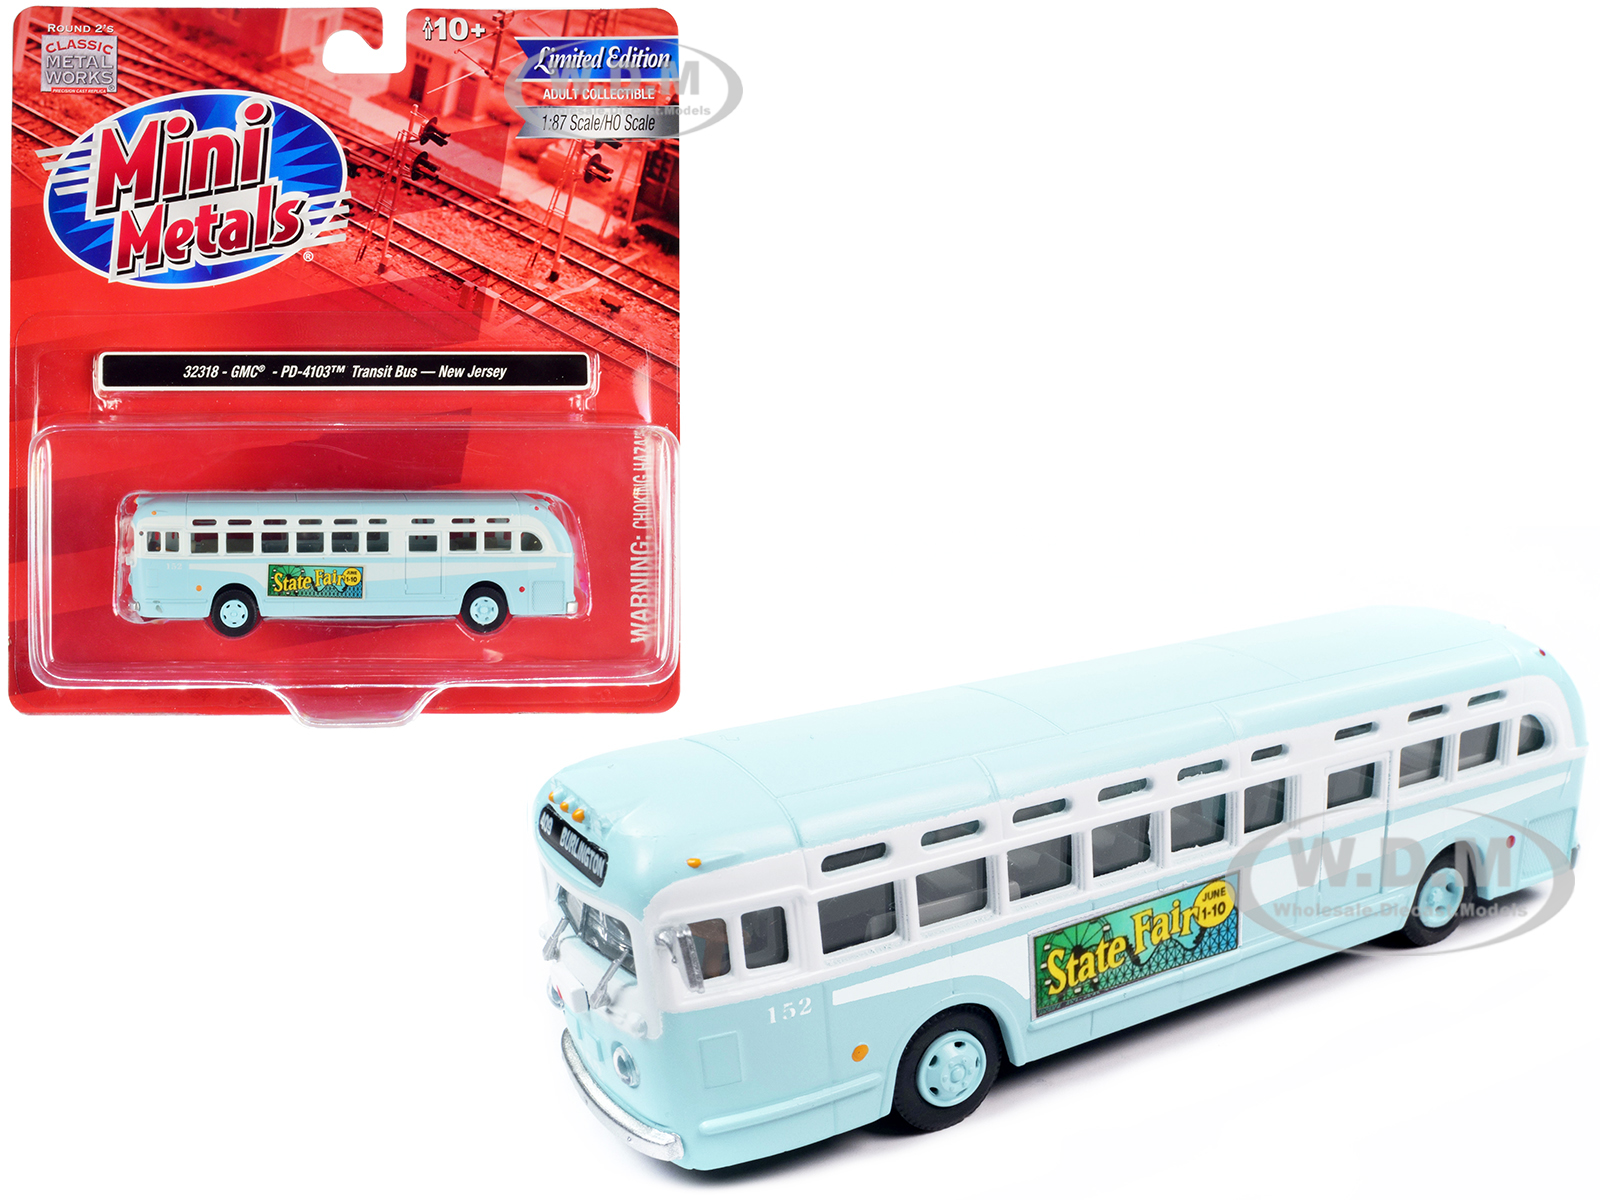 GMC PD-4103 Transit Bus 152 Light Blue "Burlington New Jersey" 1/87 (HO) Scale Model by Classic Metal Works